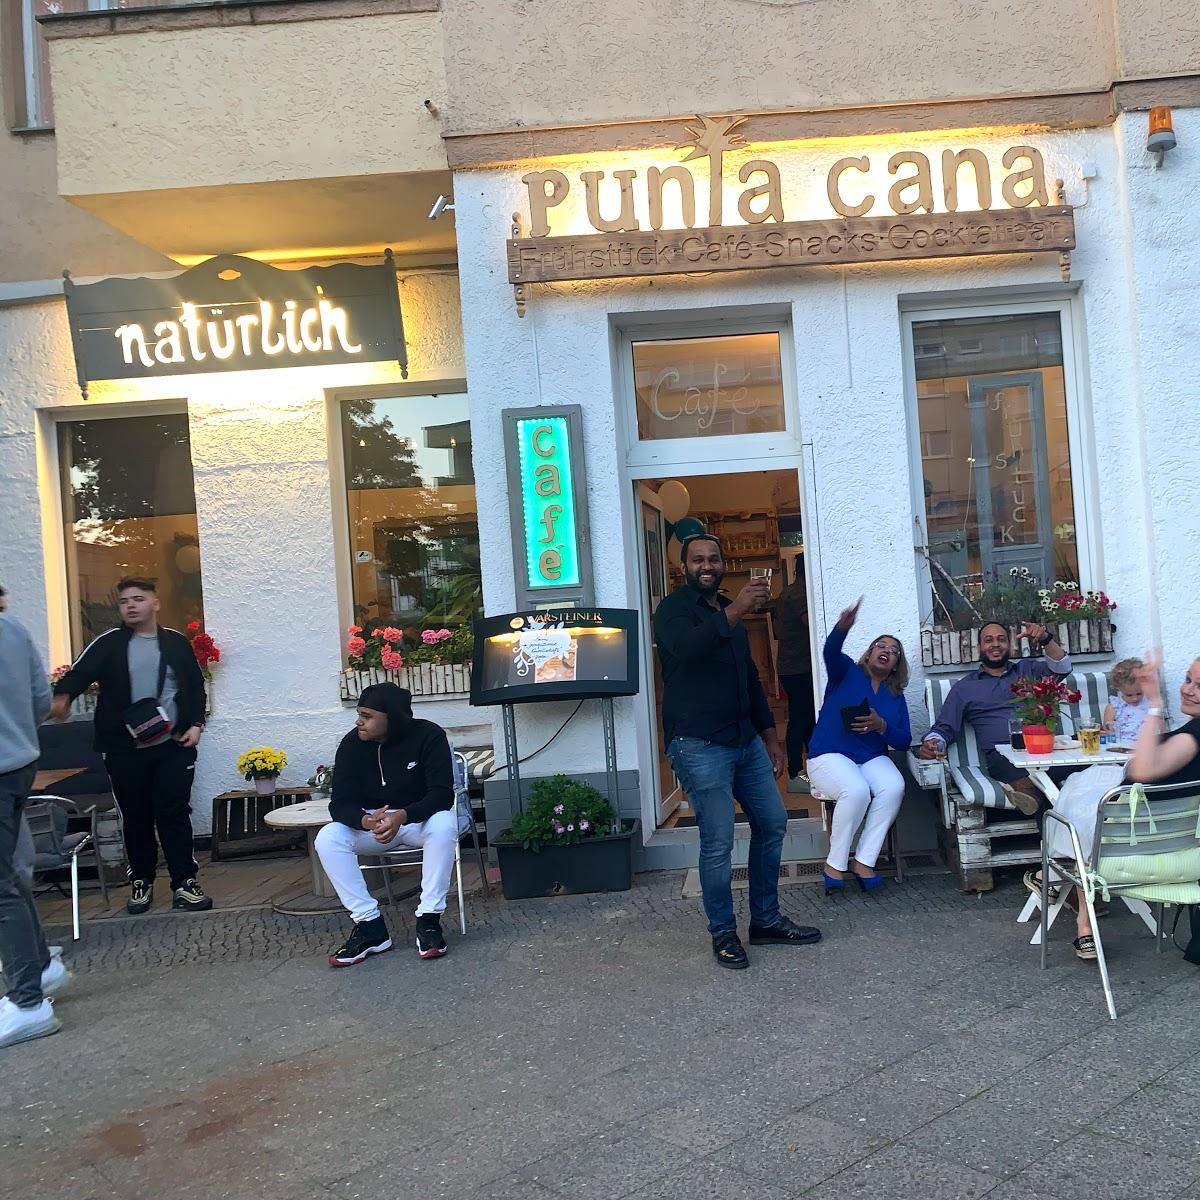 Restaurant "punta cana berlin" in Berlin